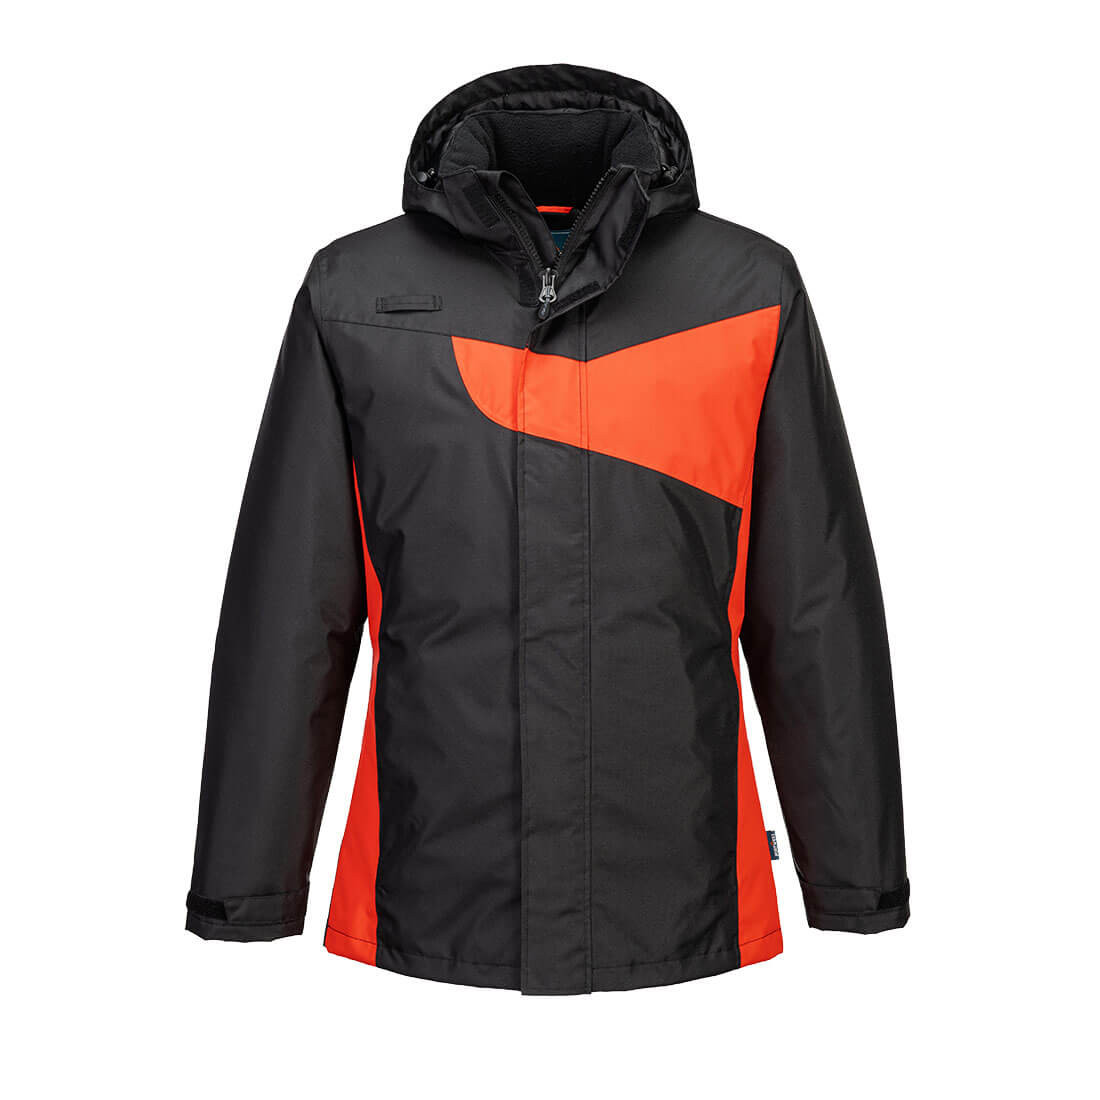 PW2 Winter Jacket - Safetywear